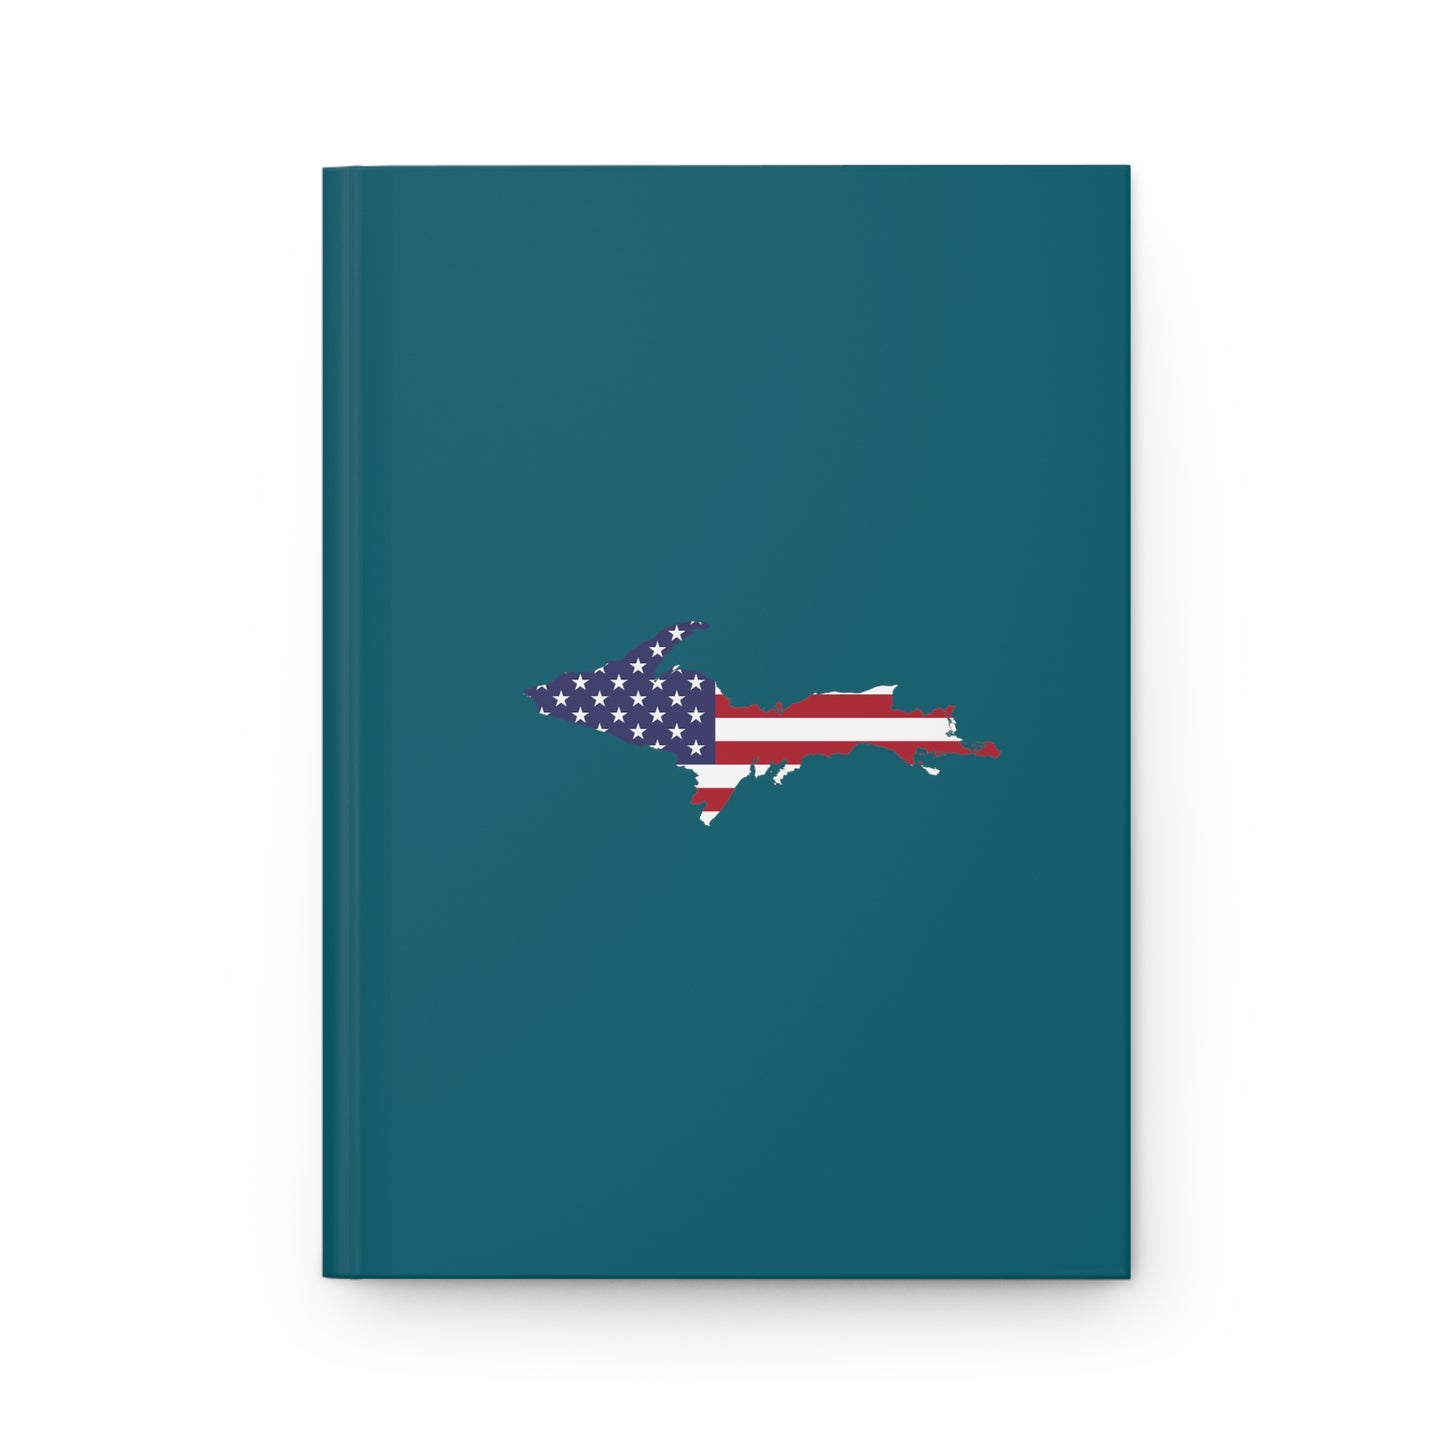 Michigan Upper Peninsula Hardcover Journal (w/ UP USA Flag) | Ruled - Auburn Hills Teal